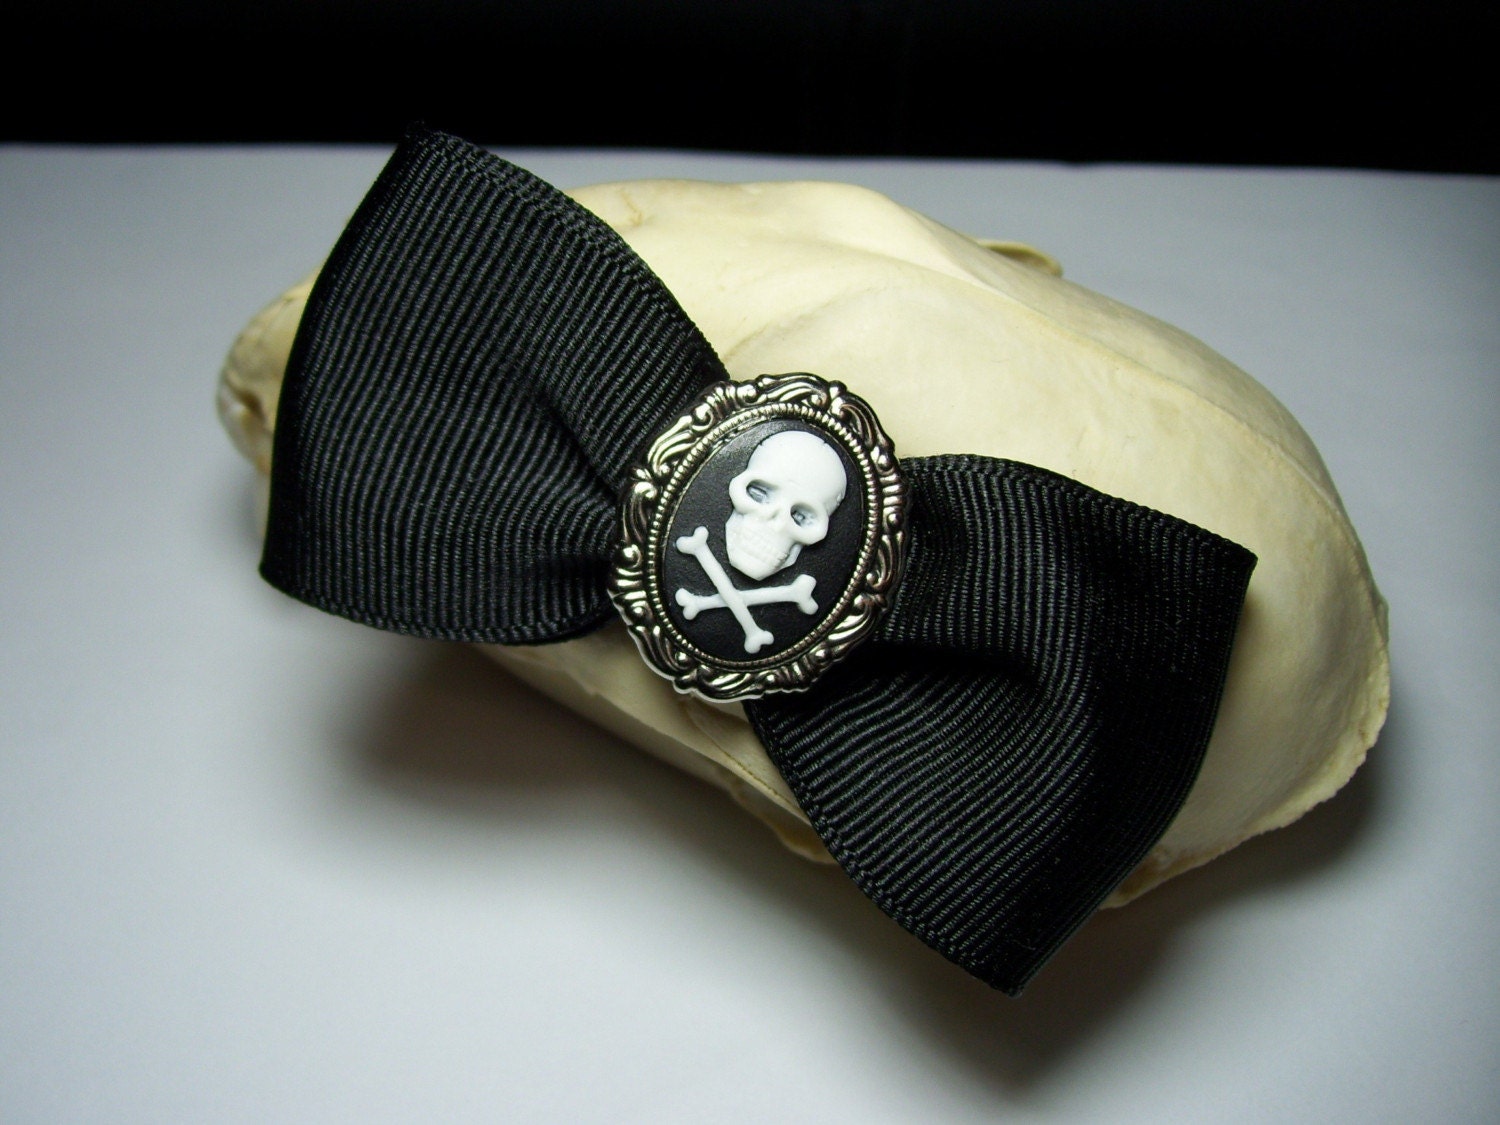 Adorable Antique Silver Black and White  Skull Cross Bones Cameo Gothic Lolita Steampunk Hair Bow Barrette Pin Clip